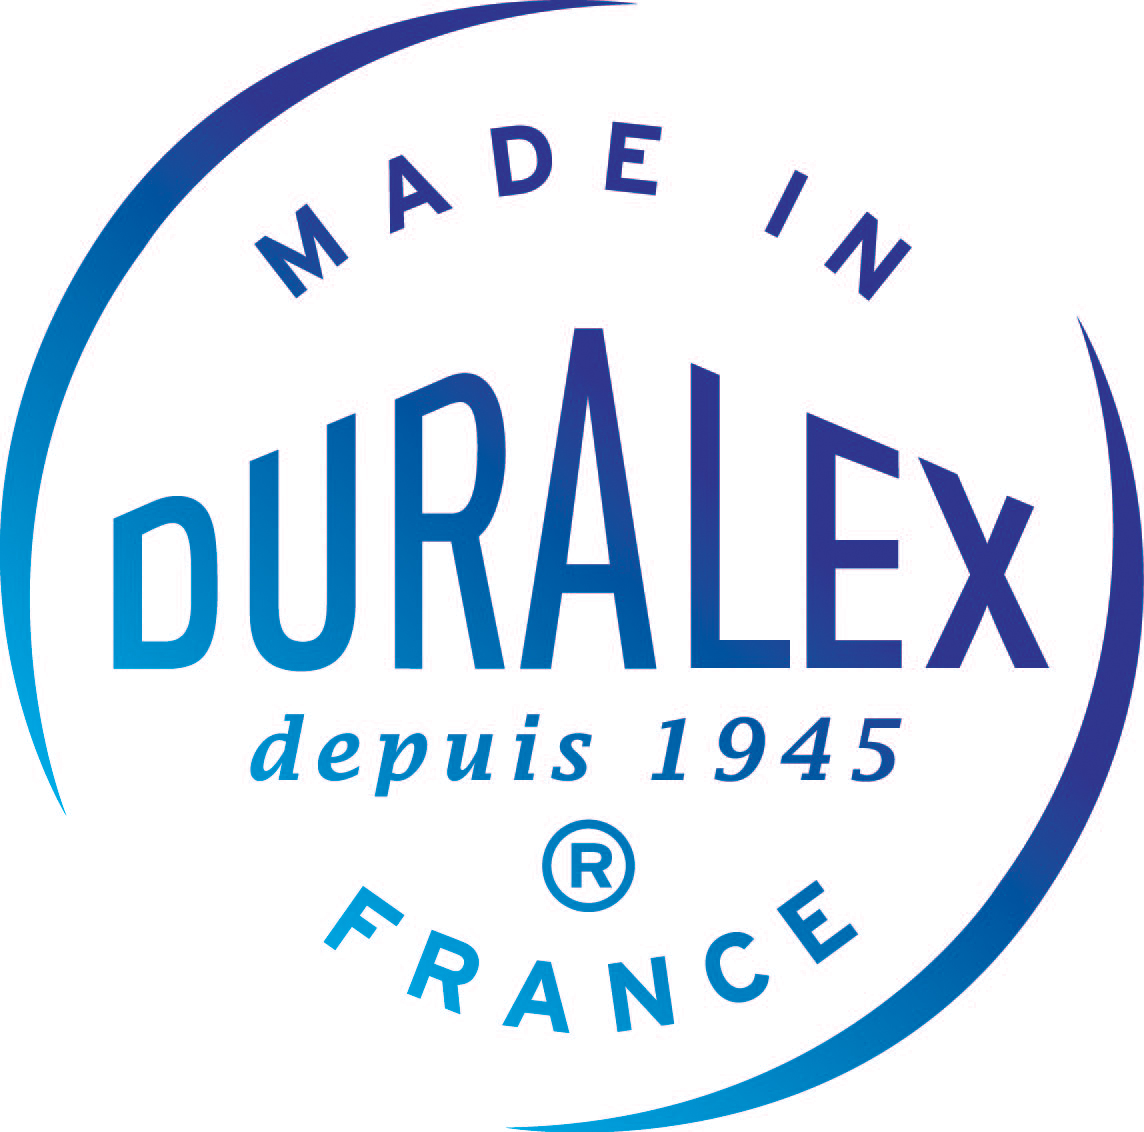 Duralex Presents Emp